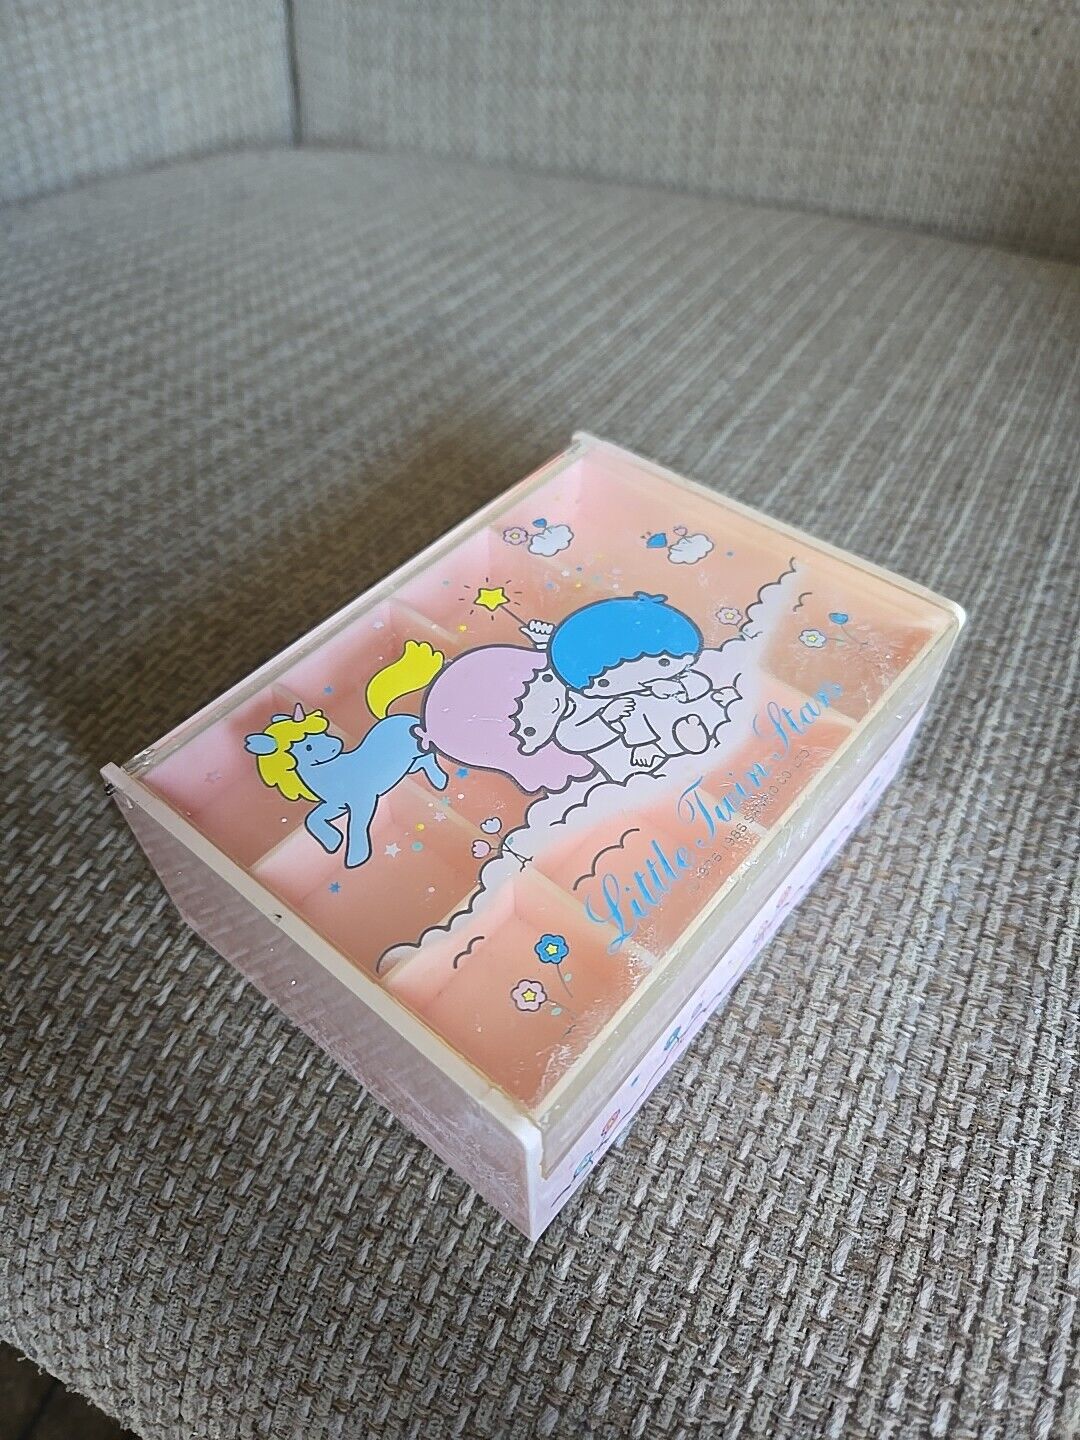 Sanrio Little Twin Stars Pink Jewelry Trinket Box Made In Japan 1980’s Vintage